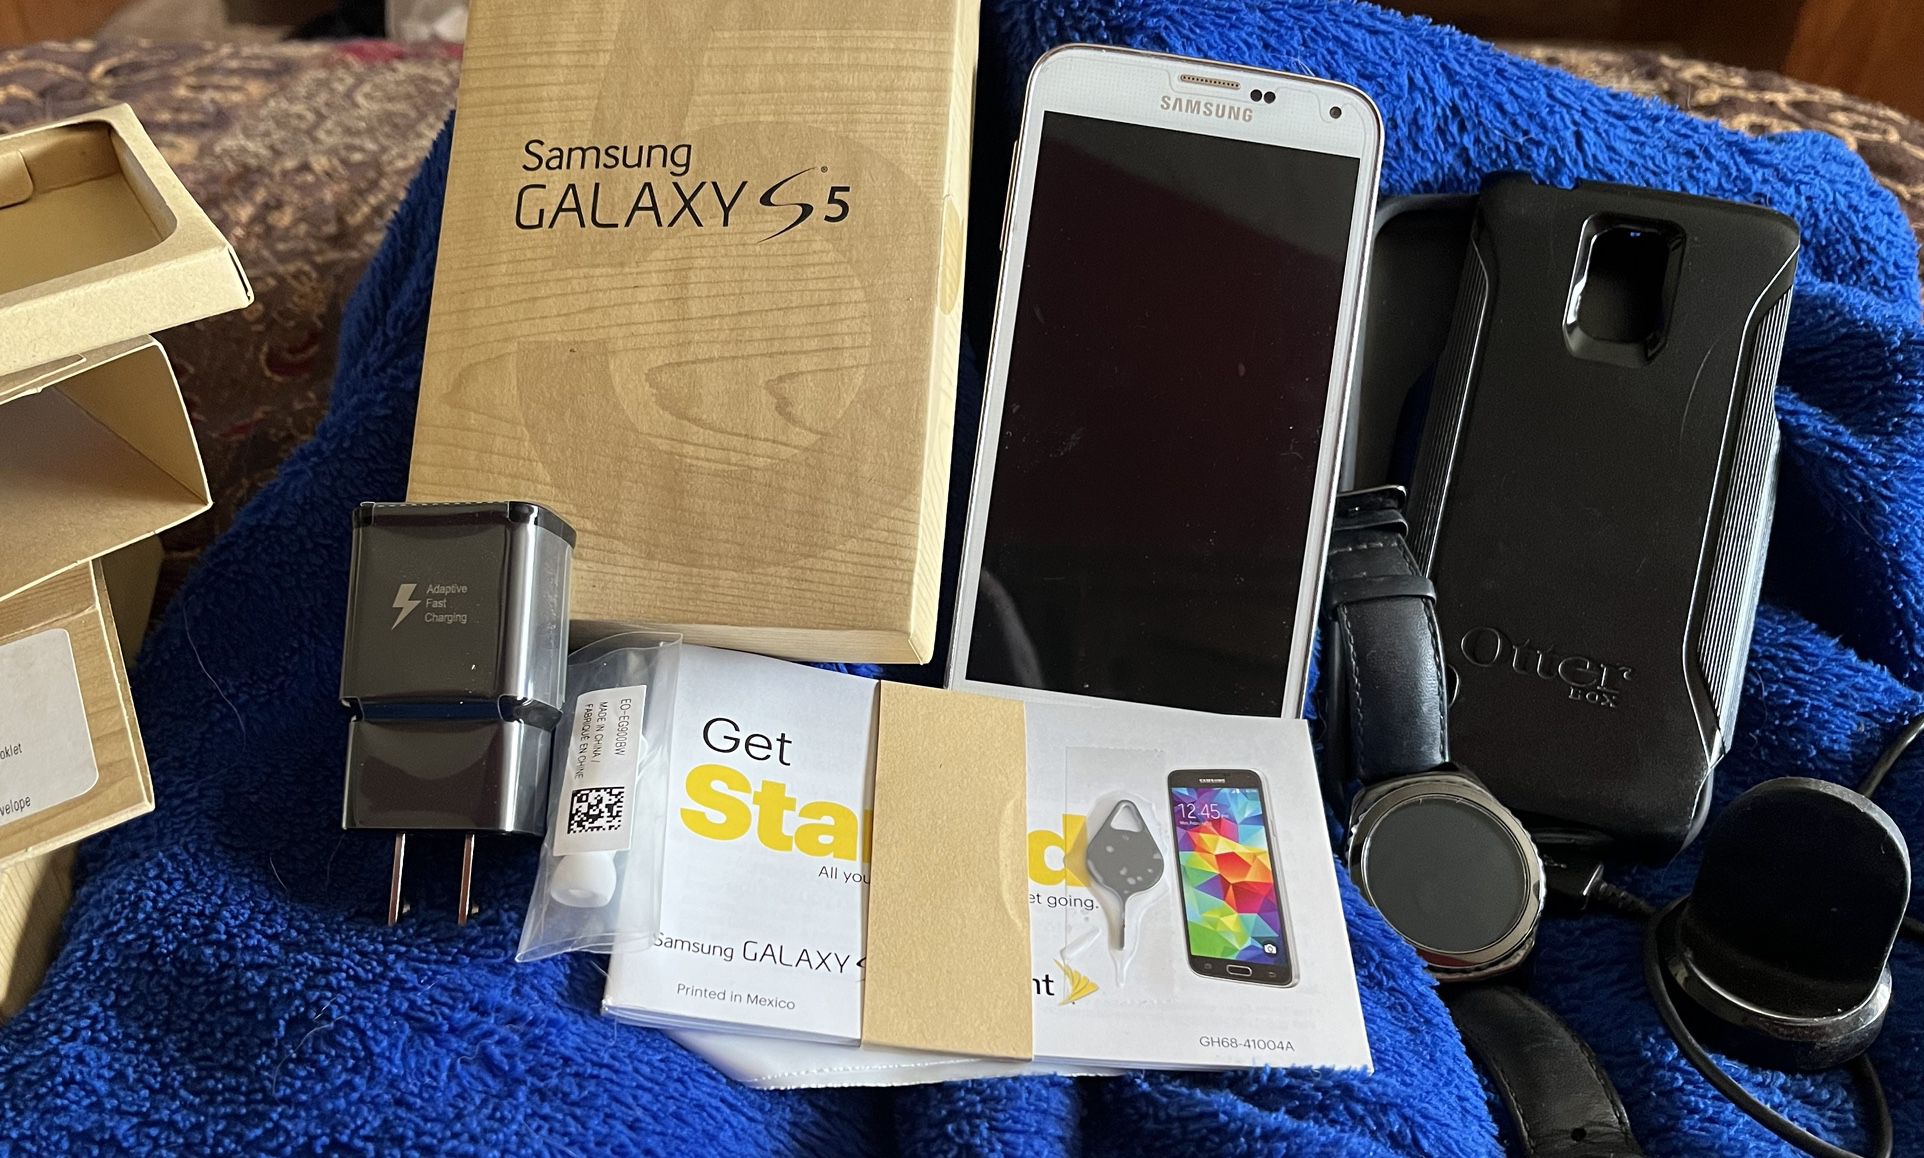 Samsung Galaxy S5 Phone And Gear S2 Watch